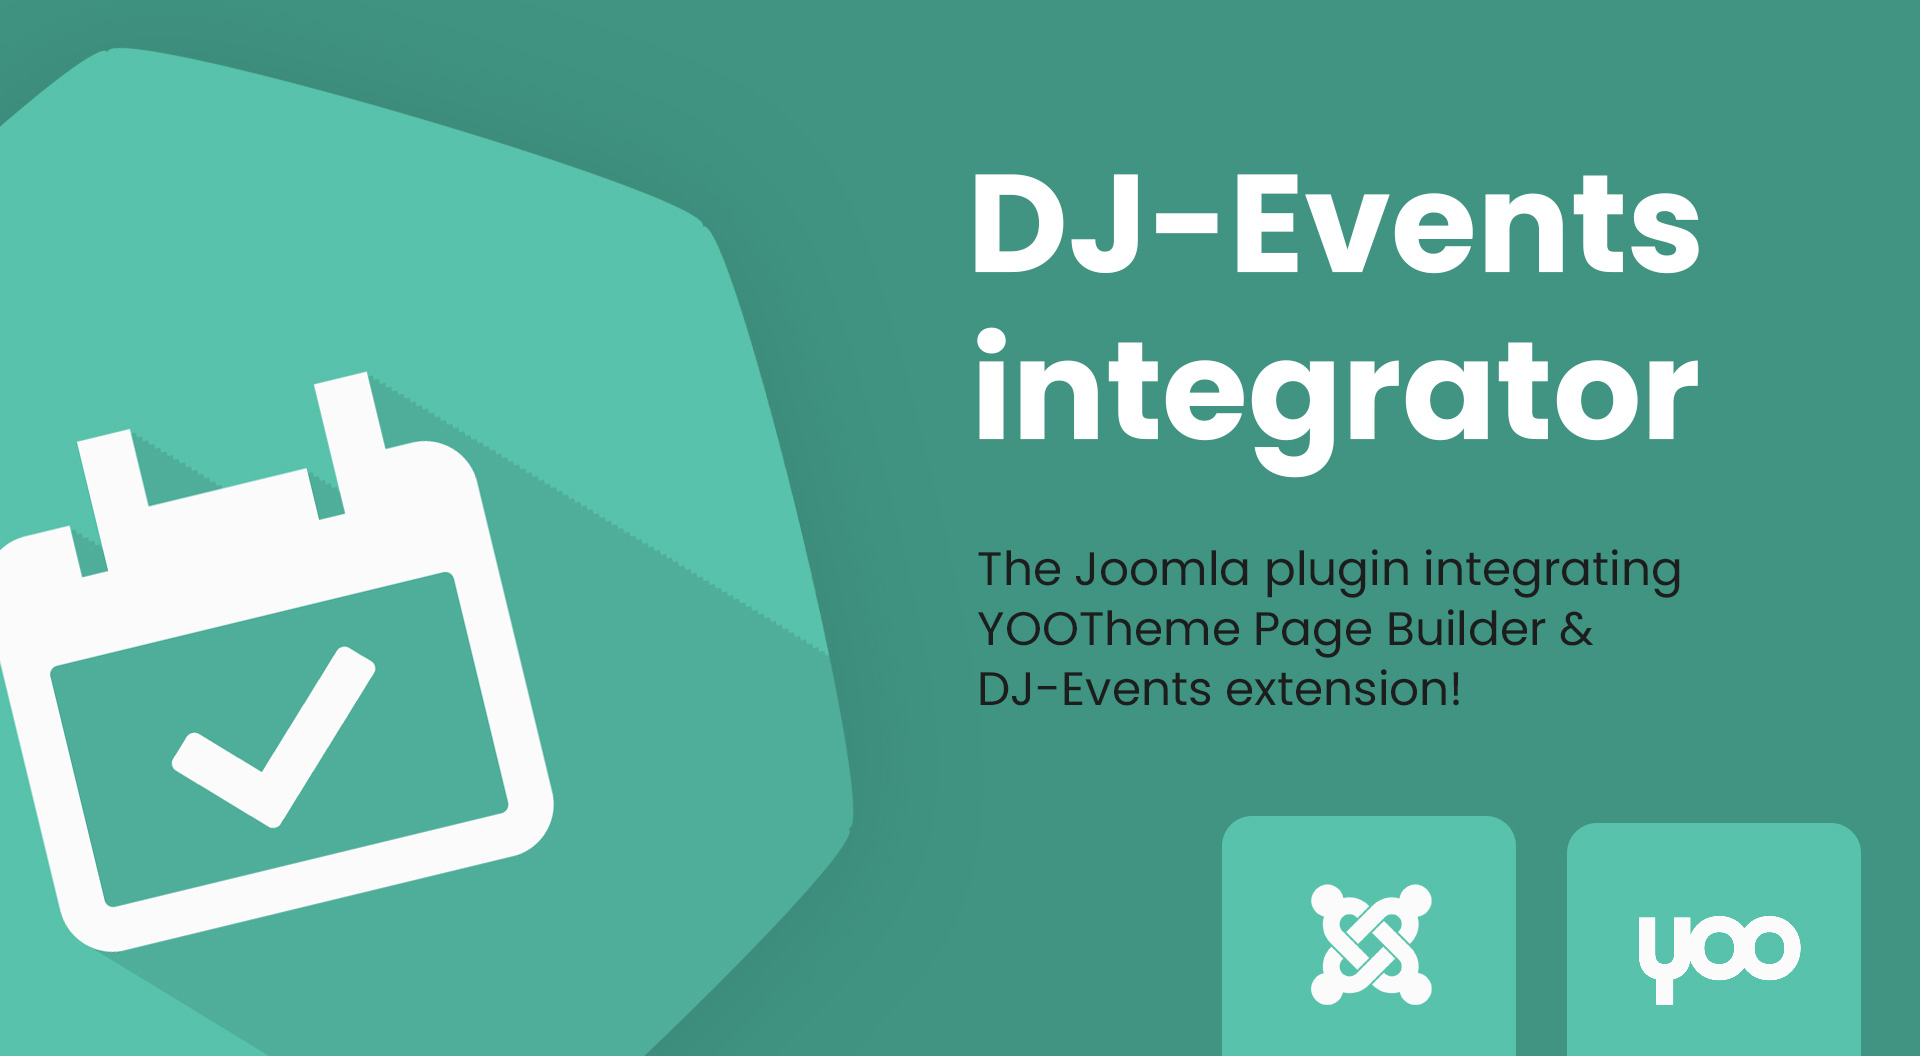 DJ-Events integrator